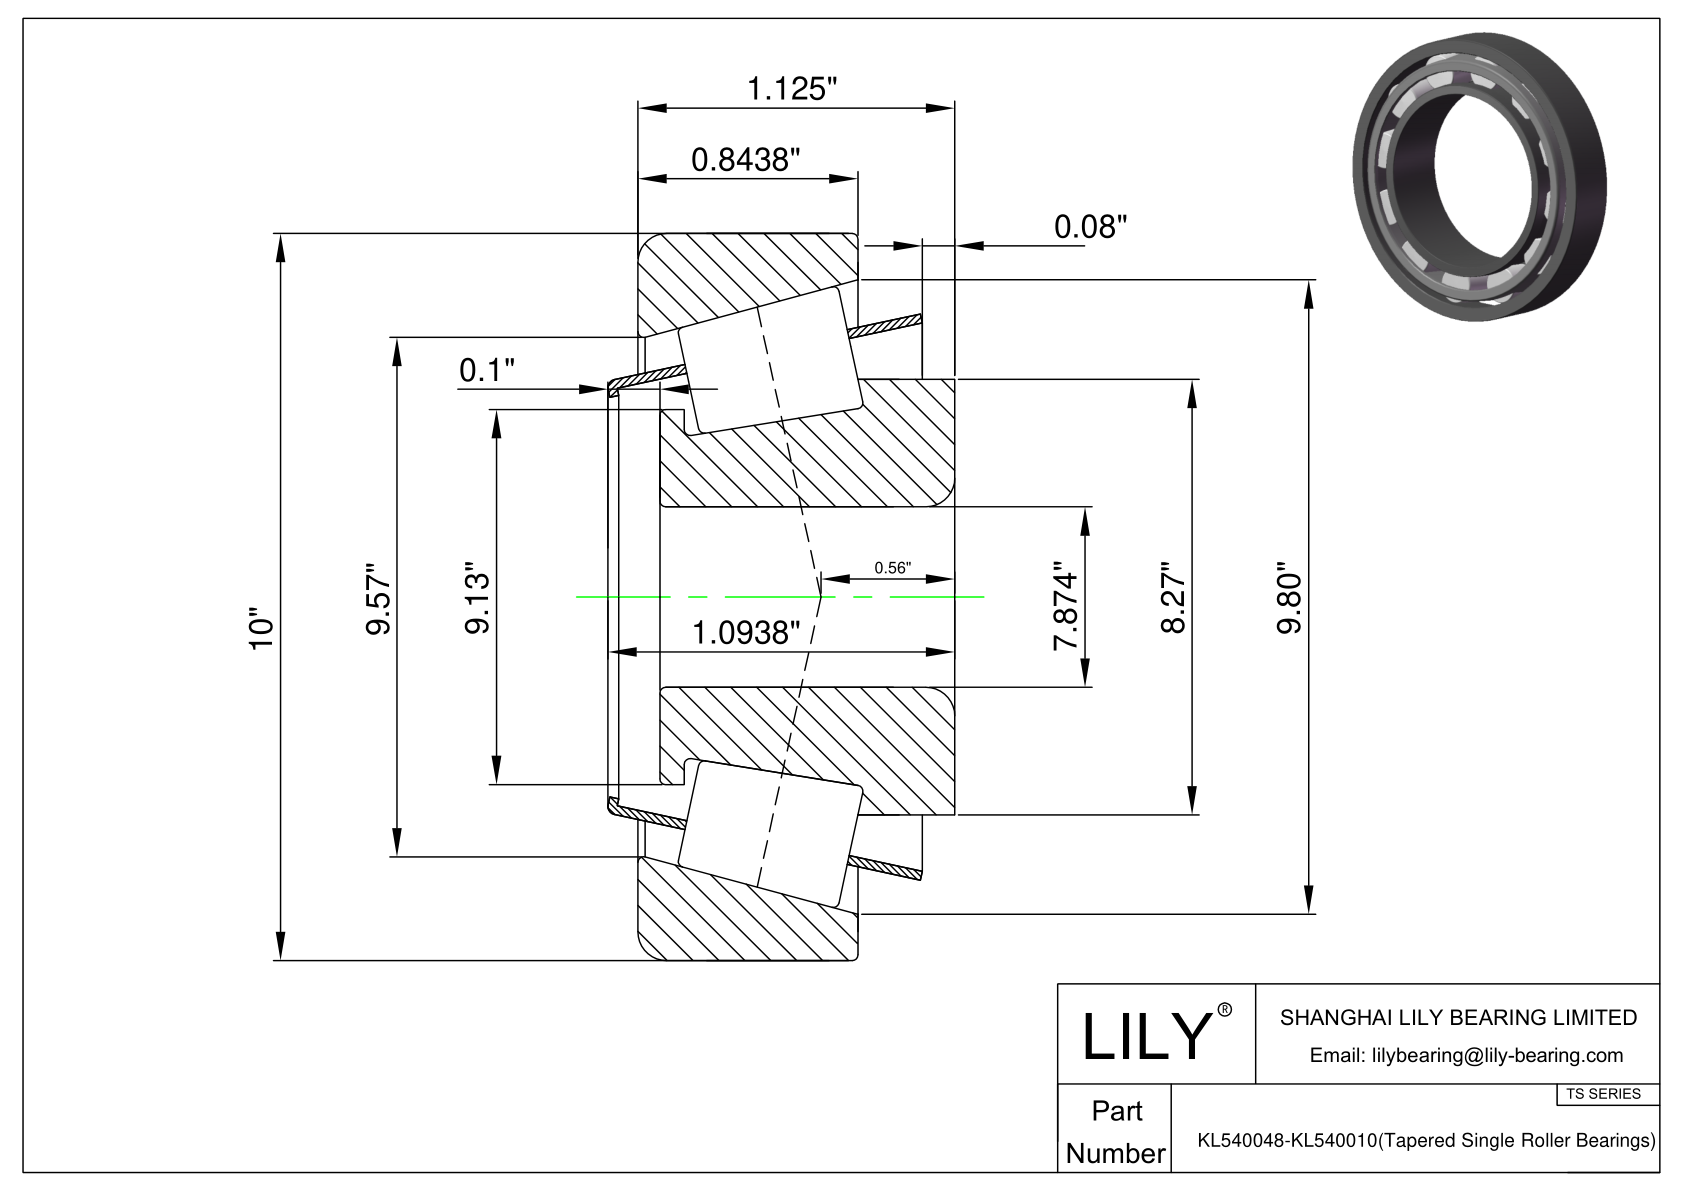 KL540048-KL540010 TS系列(圆锥单滚子轴承)(英制) CAD图形